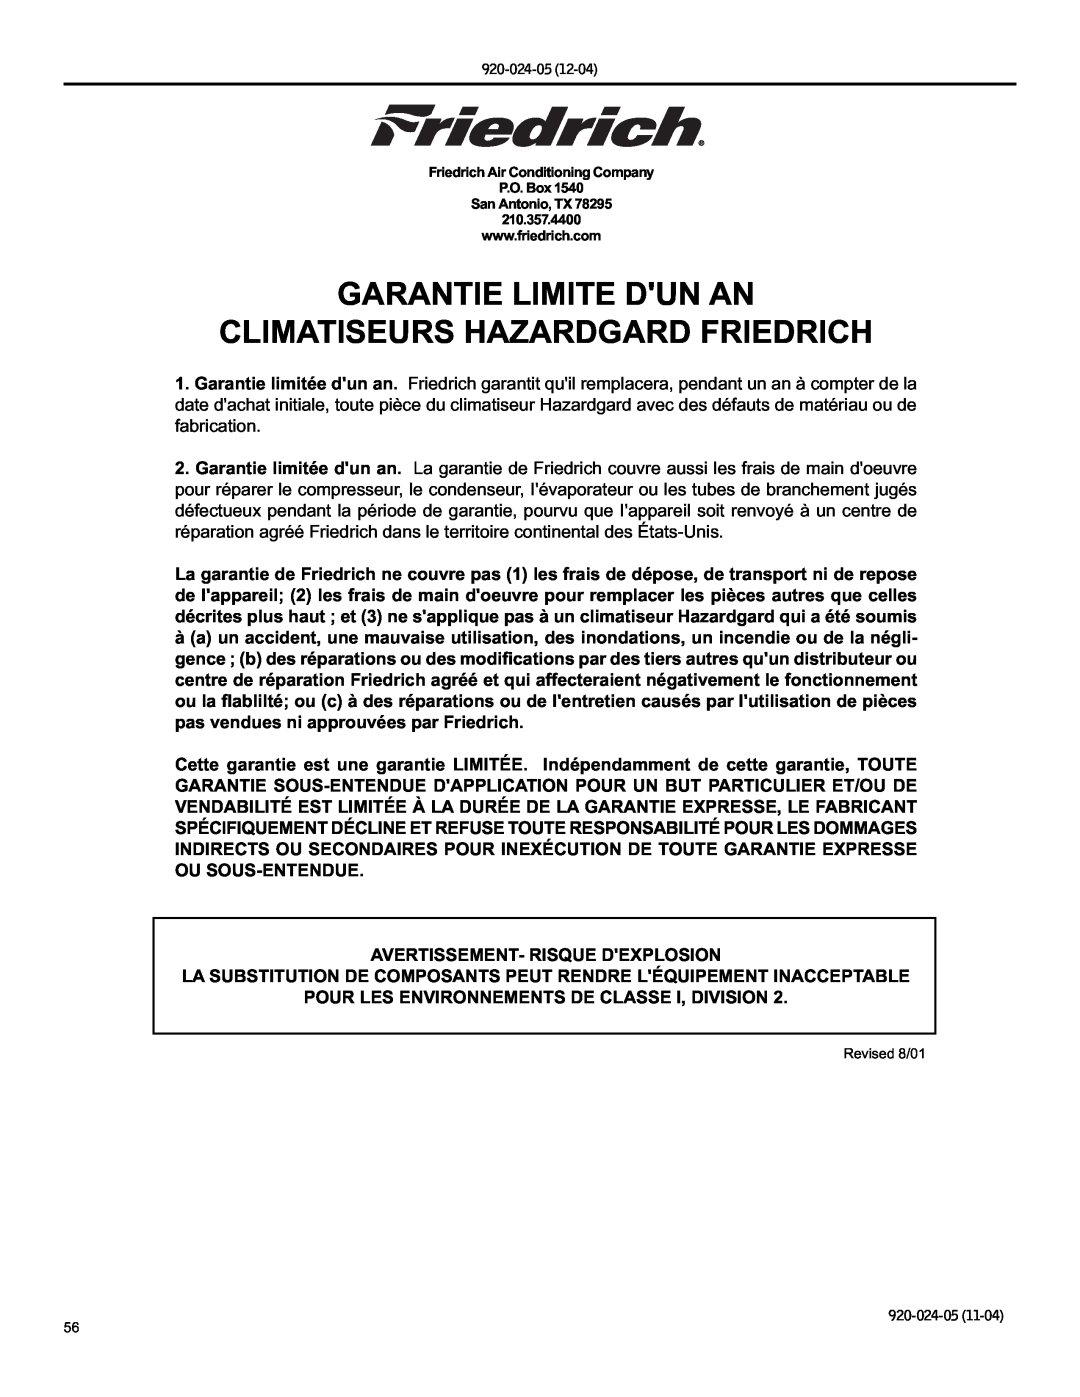 Friedrich SH15, SH20 operation manual Garantie Limite Dun An, Climatiseurs Hazardgard Friedrich 